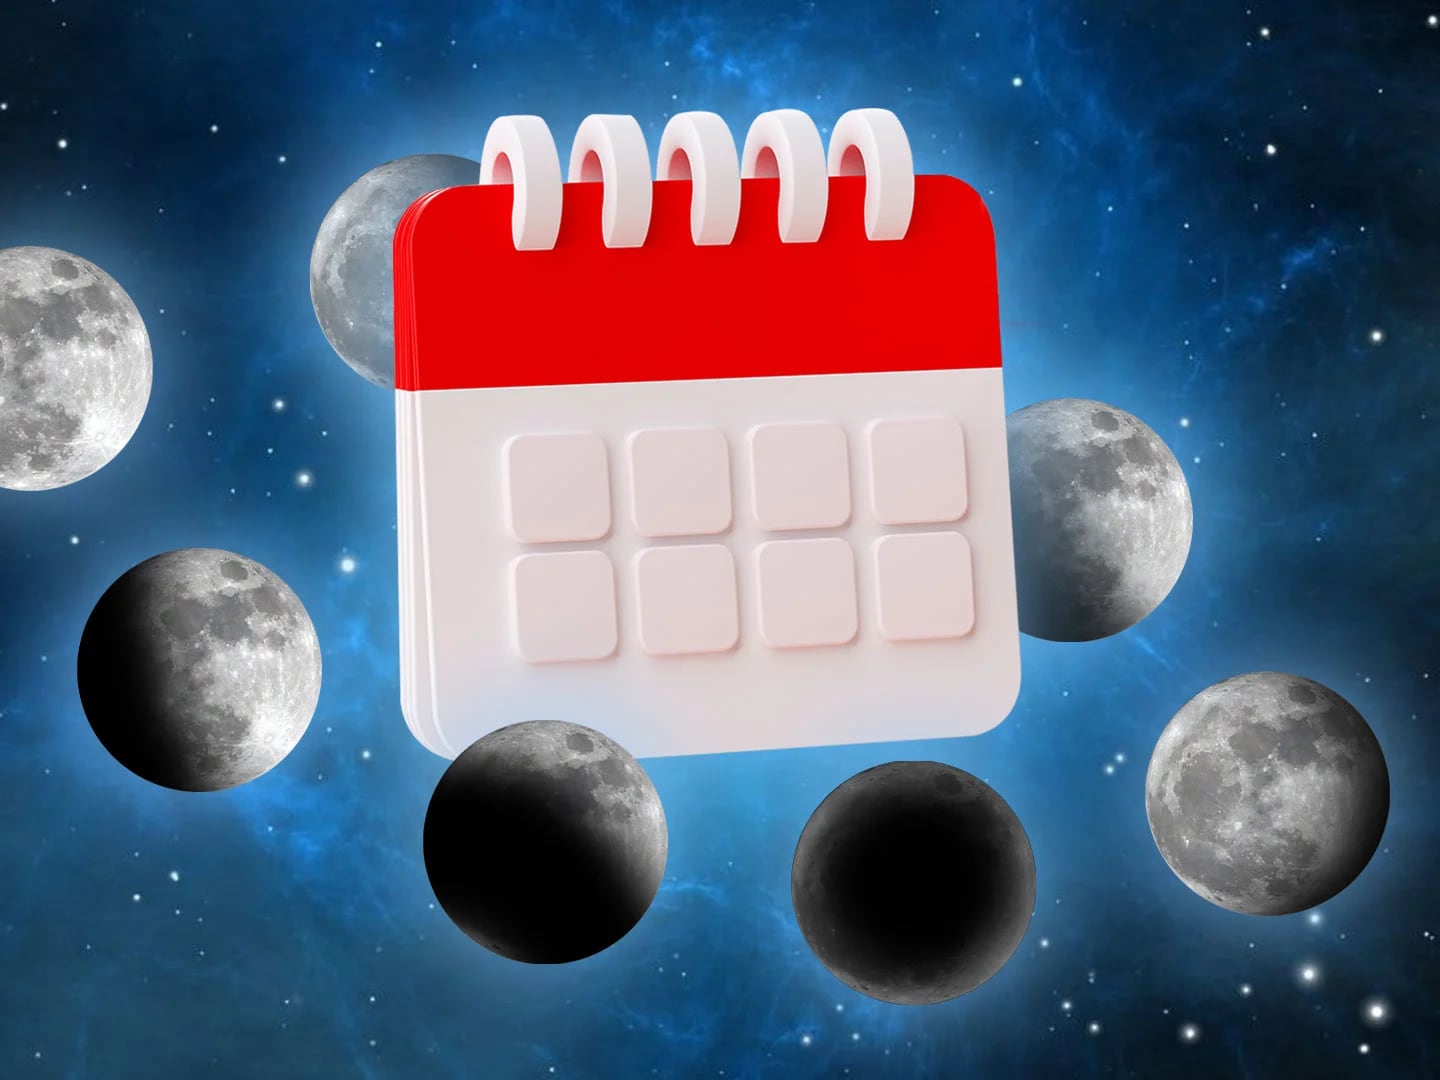 Calendario lunar 2024 — idealista/news